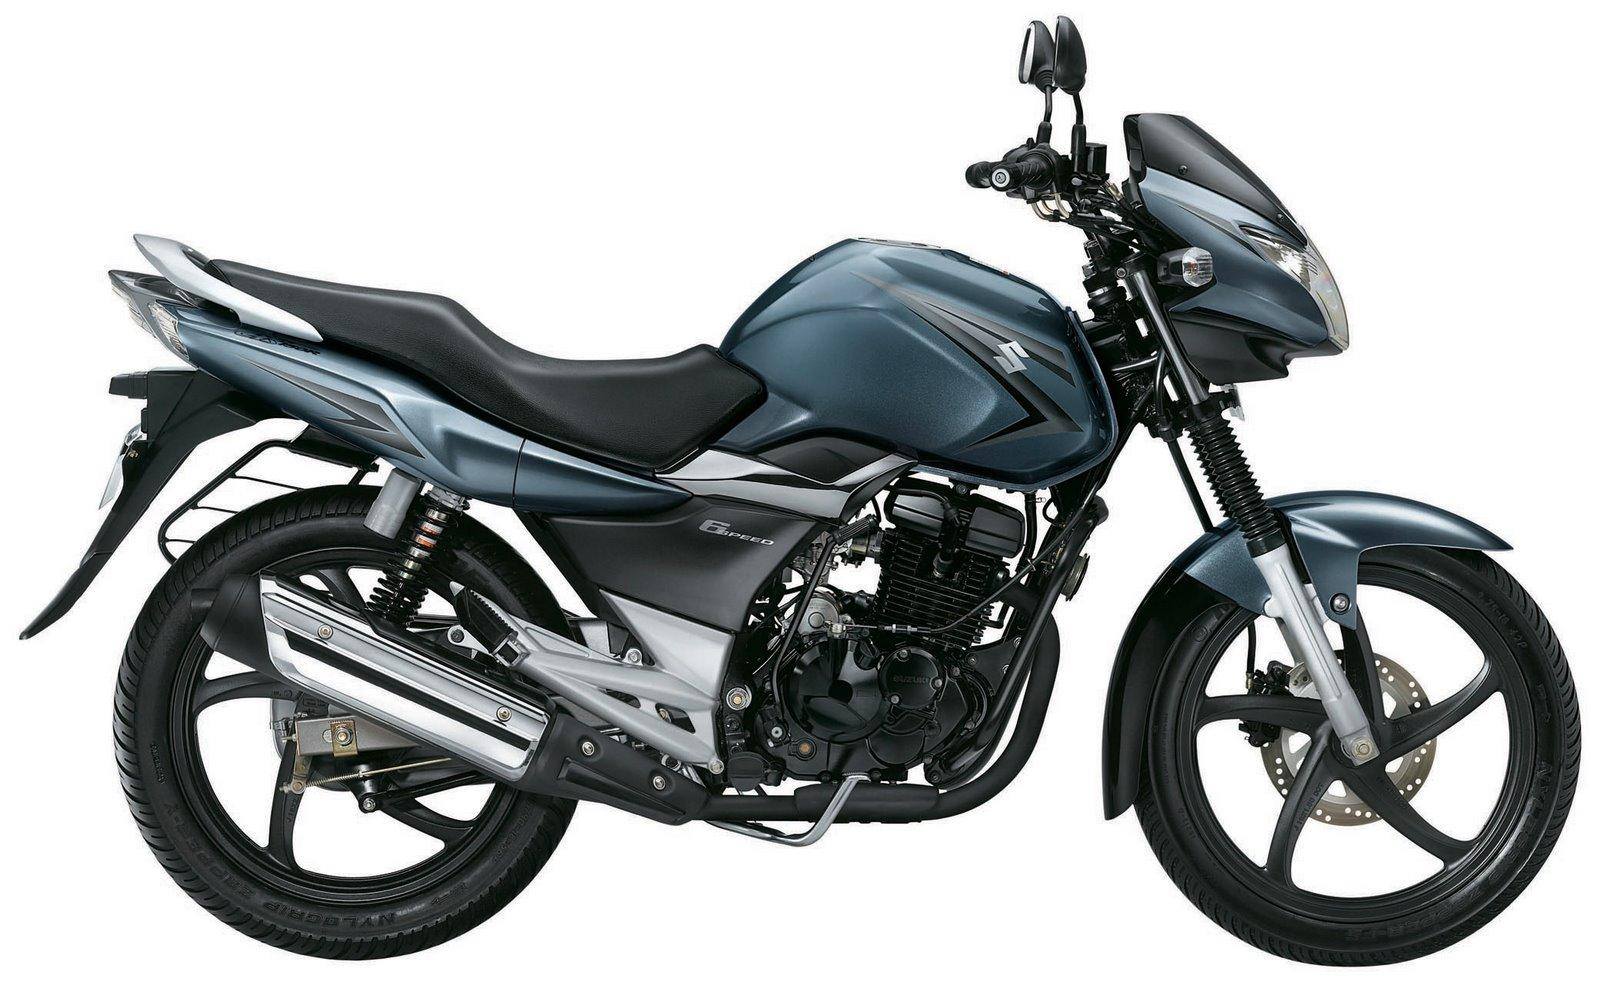 Suzuki EN150A  nakedbike hạng nhỏ cho Việt Nam  VnExpress